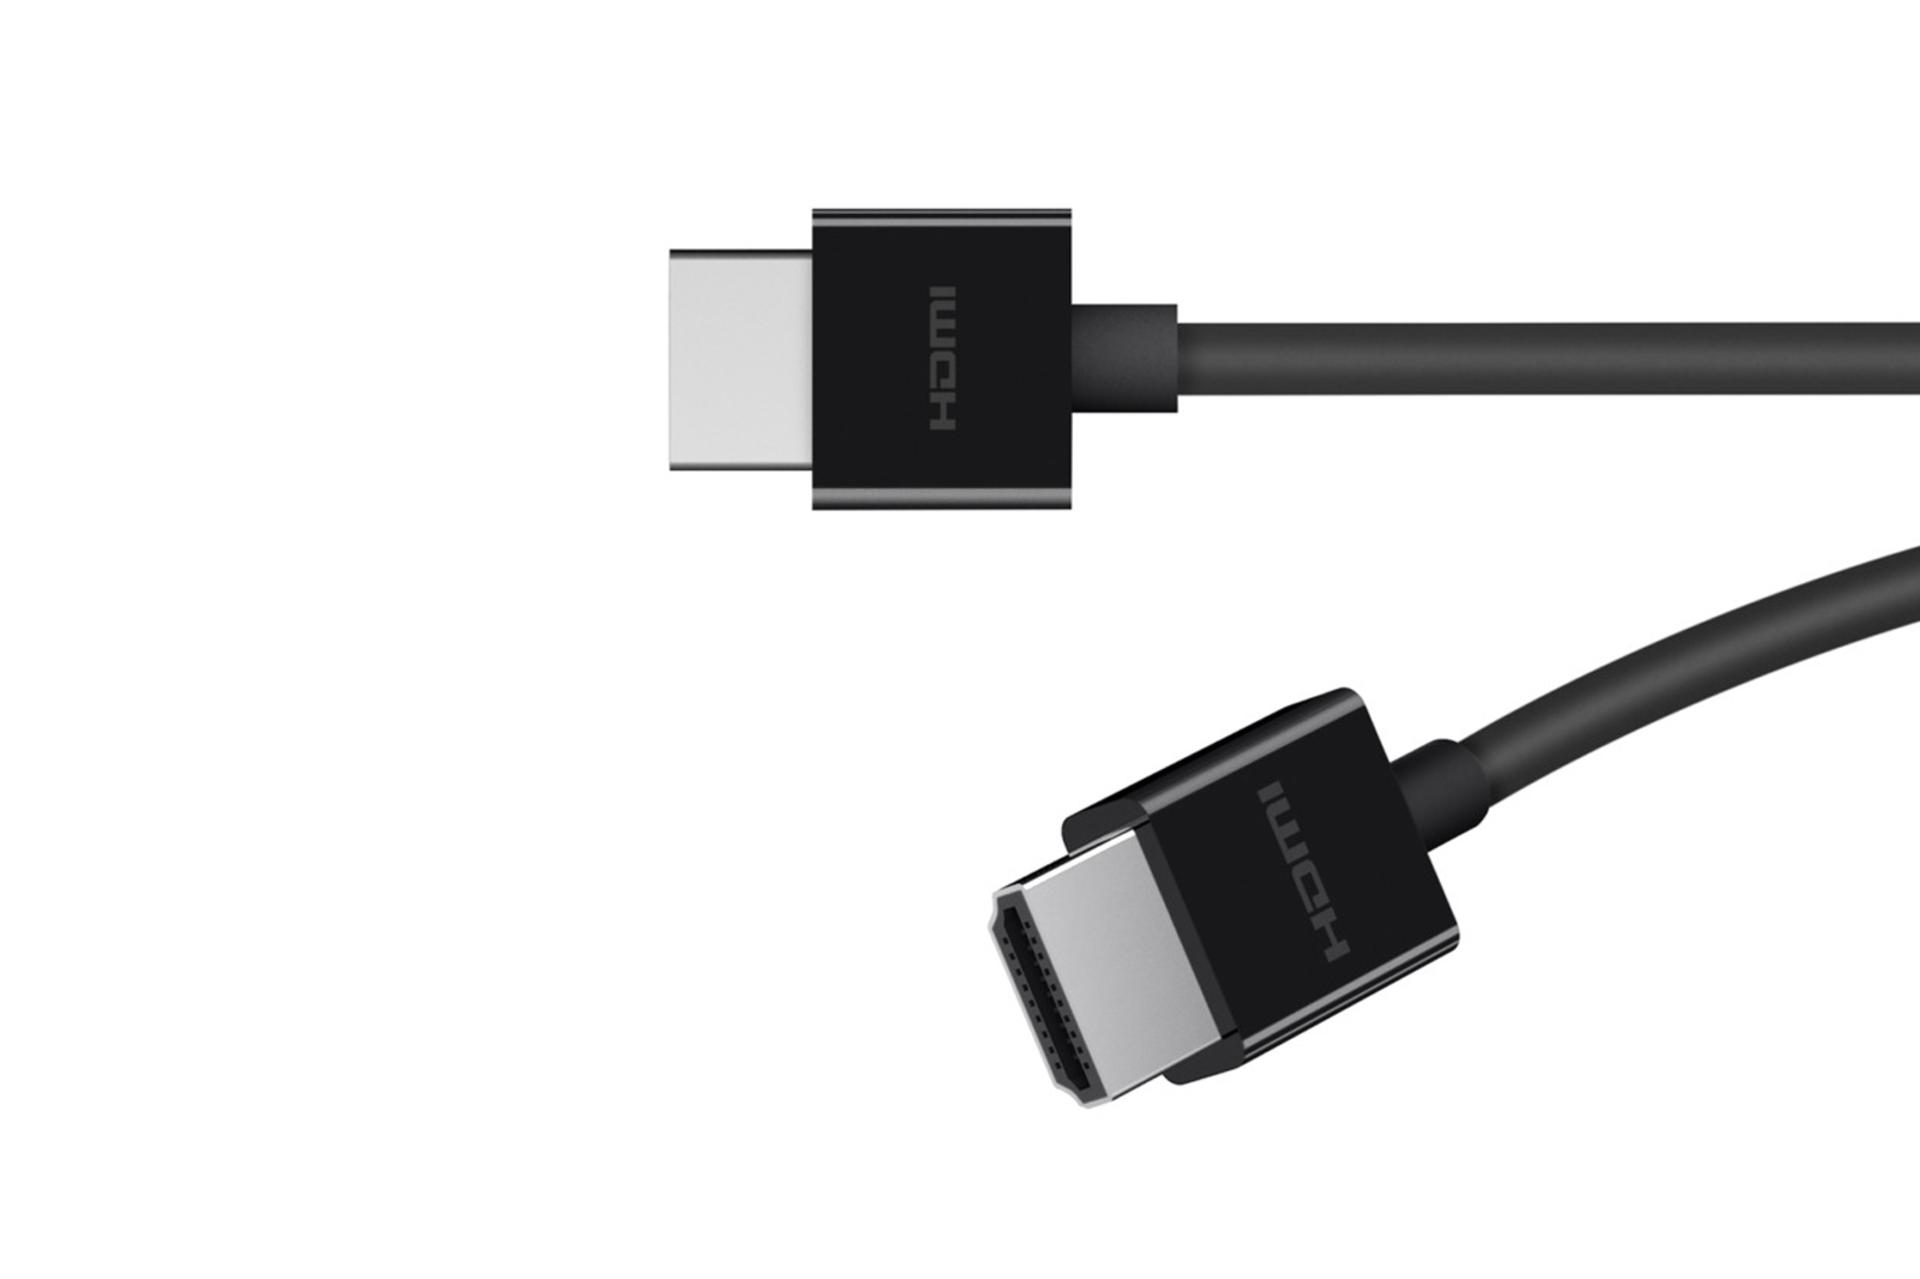 کانکتور و اتصال کابل HDMI بلکین AV10175bt2MBKV2 8K 60hz نسخه 2.1 با طول 2 متر